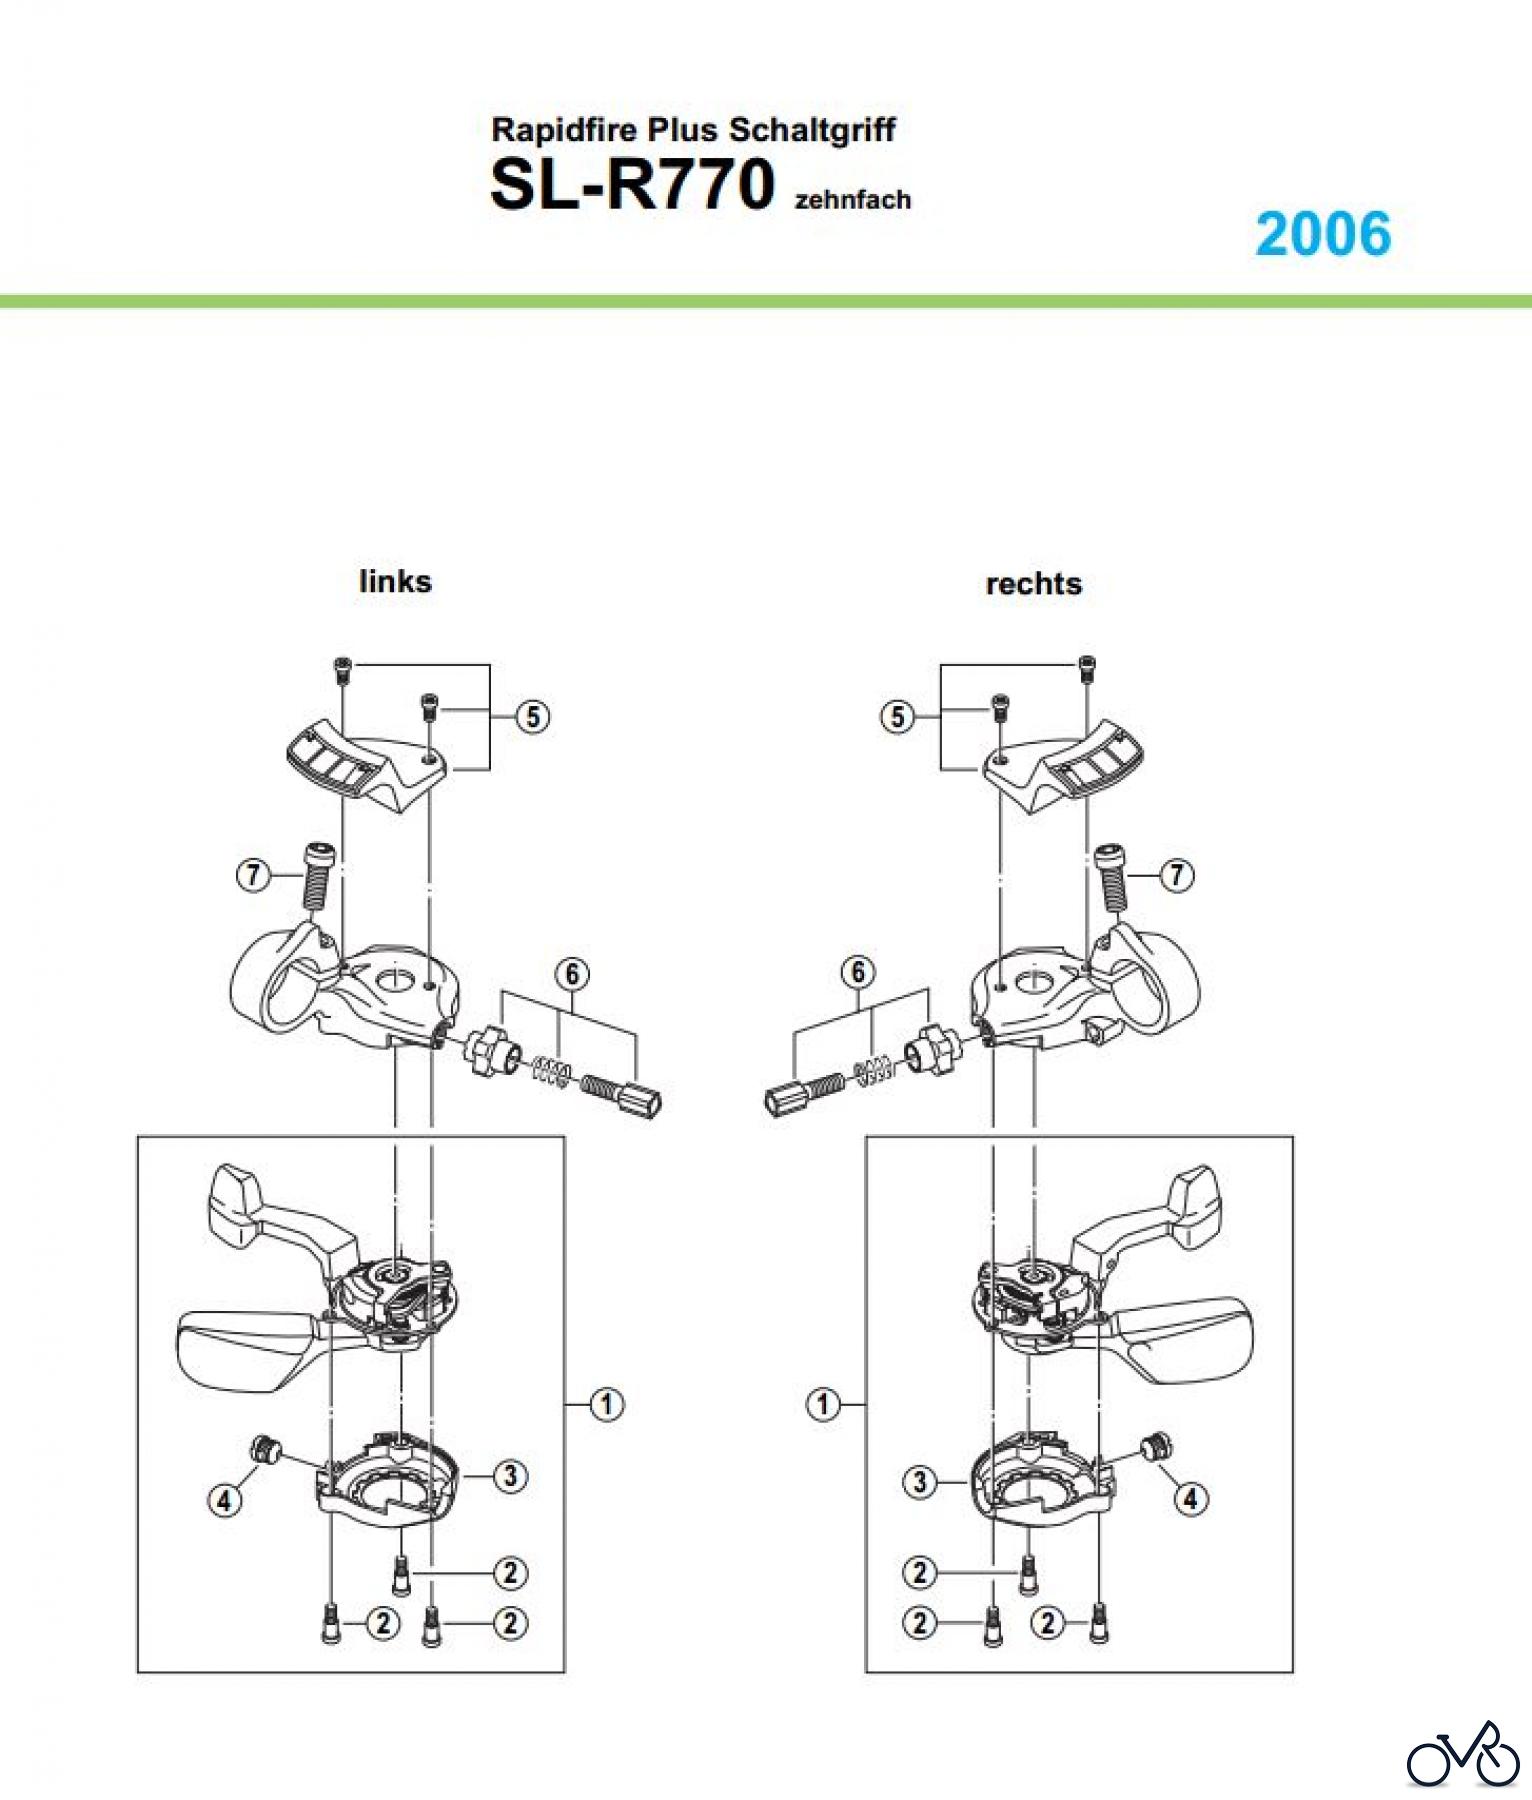  Shimano SL Shift Lever - Schalthebel SL-R770, 2005 Rapidfire Plus Schaltgriff